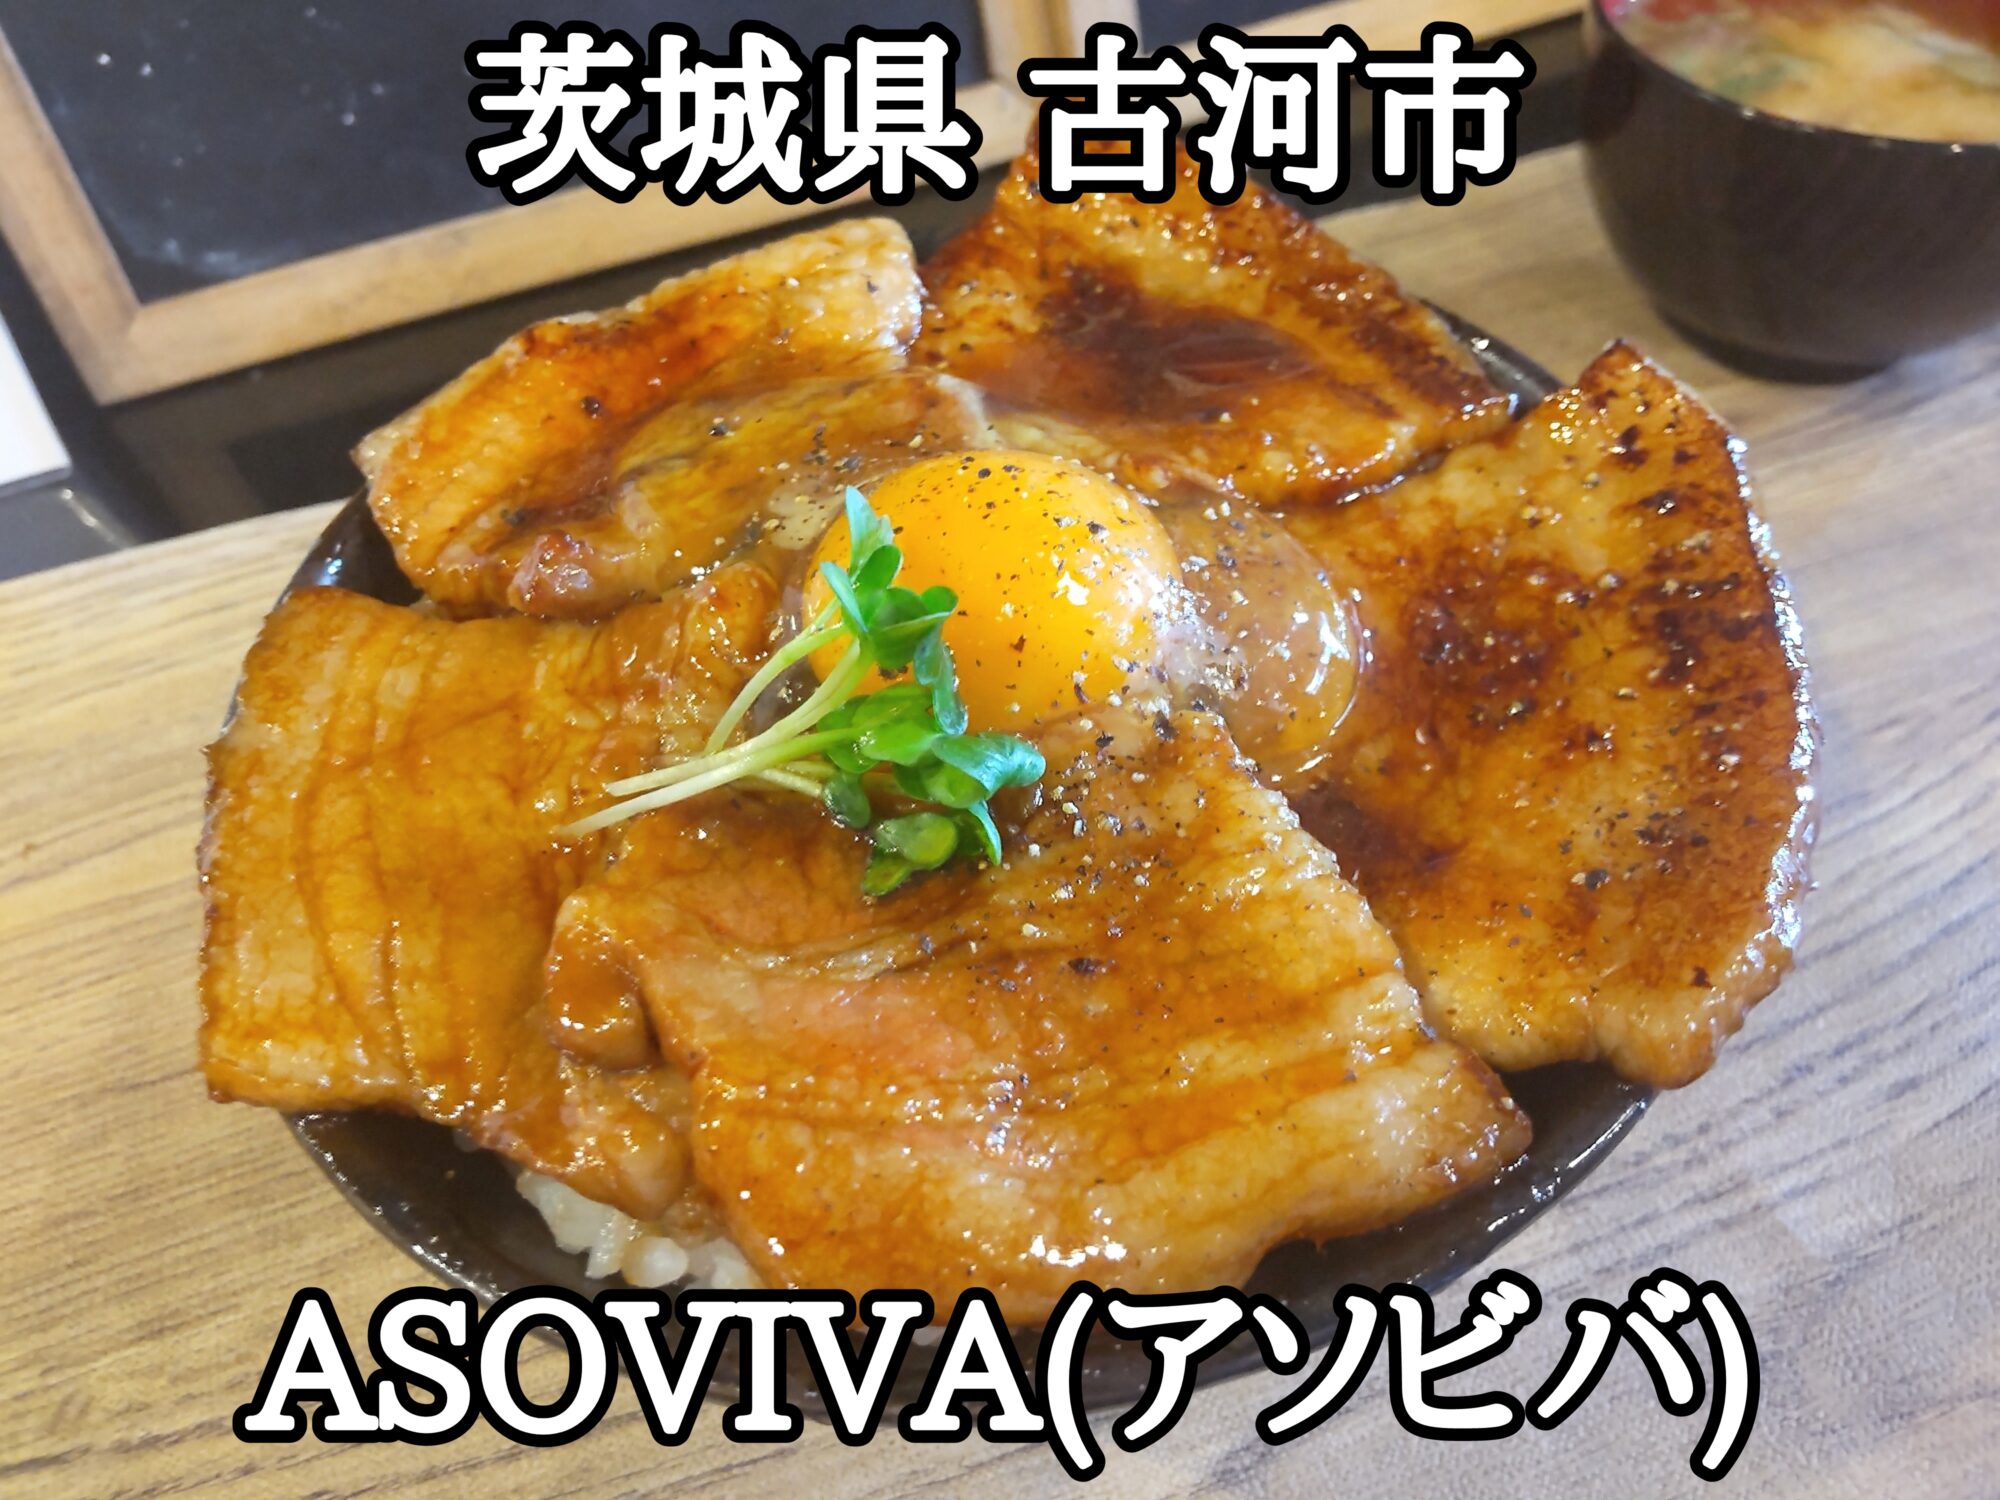 【茨城県】【古河市】「ASOVIVA(アソビバ)」超豚丼大盛味噌汁付美味我満足